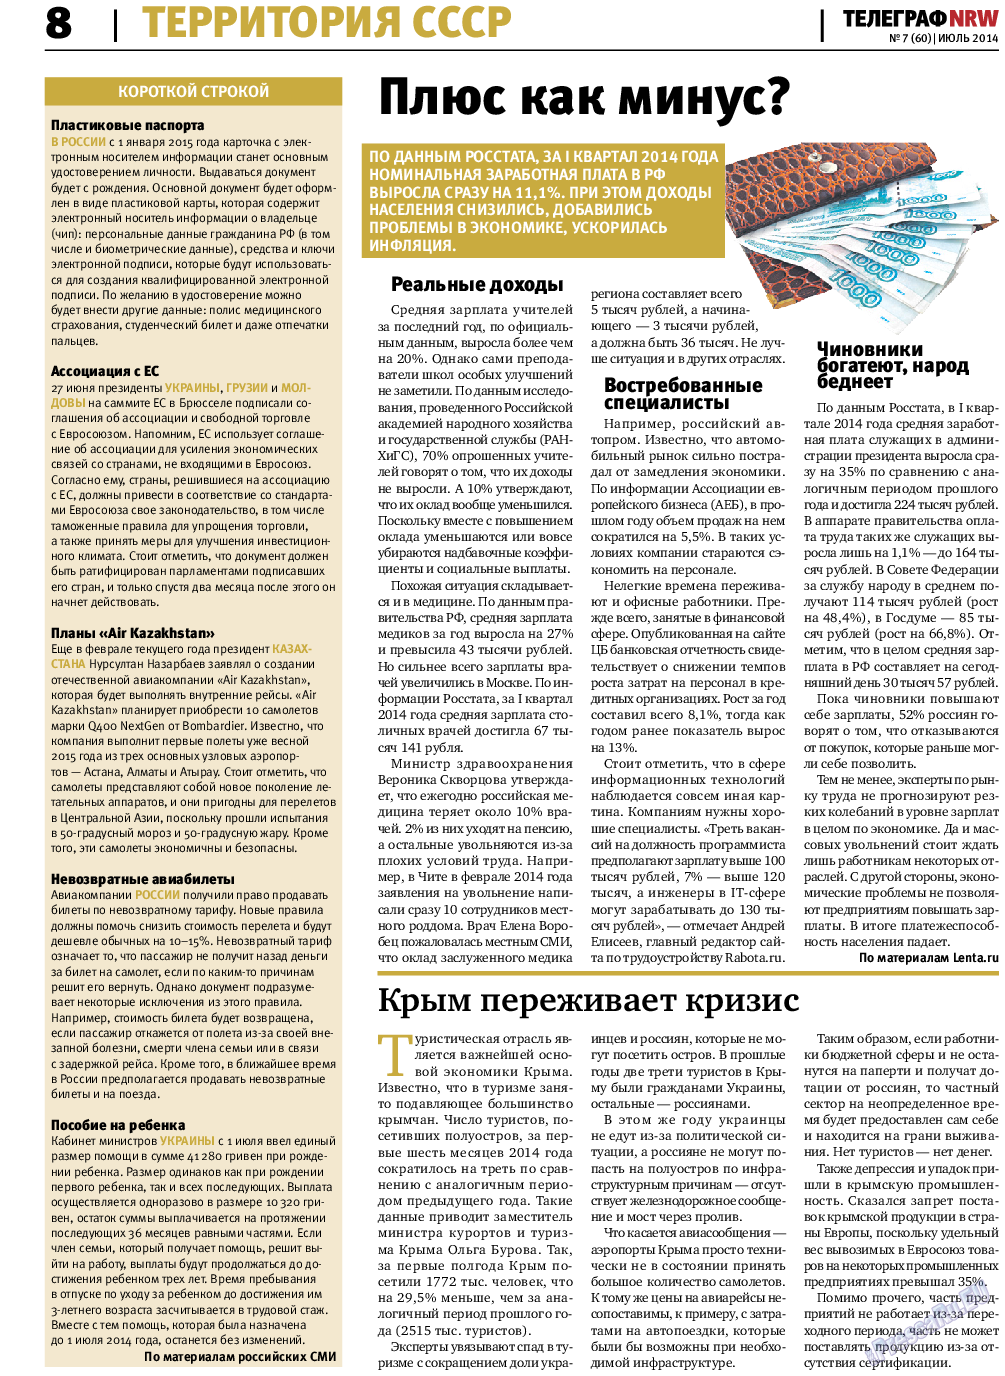 Телеграф NRW, газета. 2014 №7 стр.8